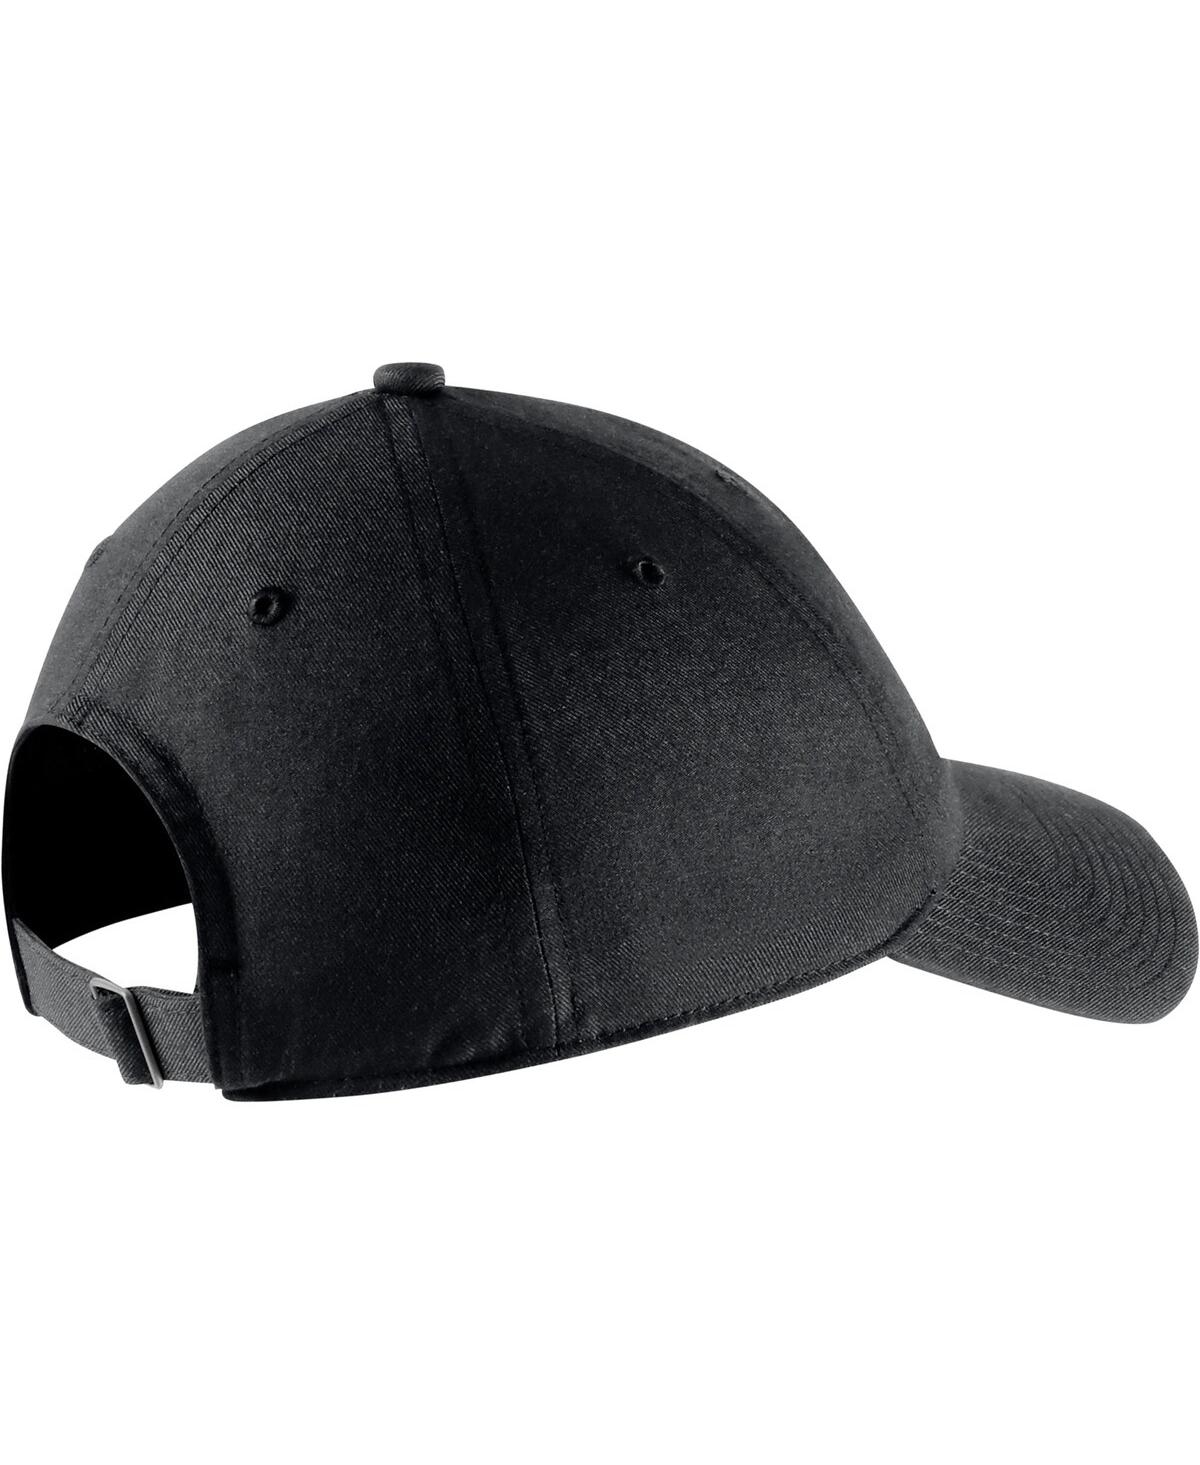 Shop Nike Men's  Black Canada Soccer Campus Adjustable Hat